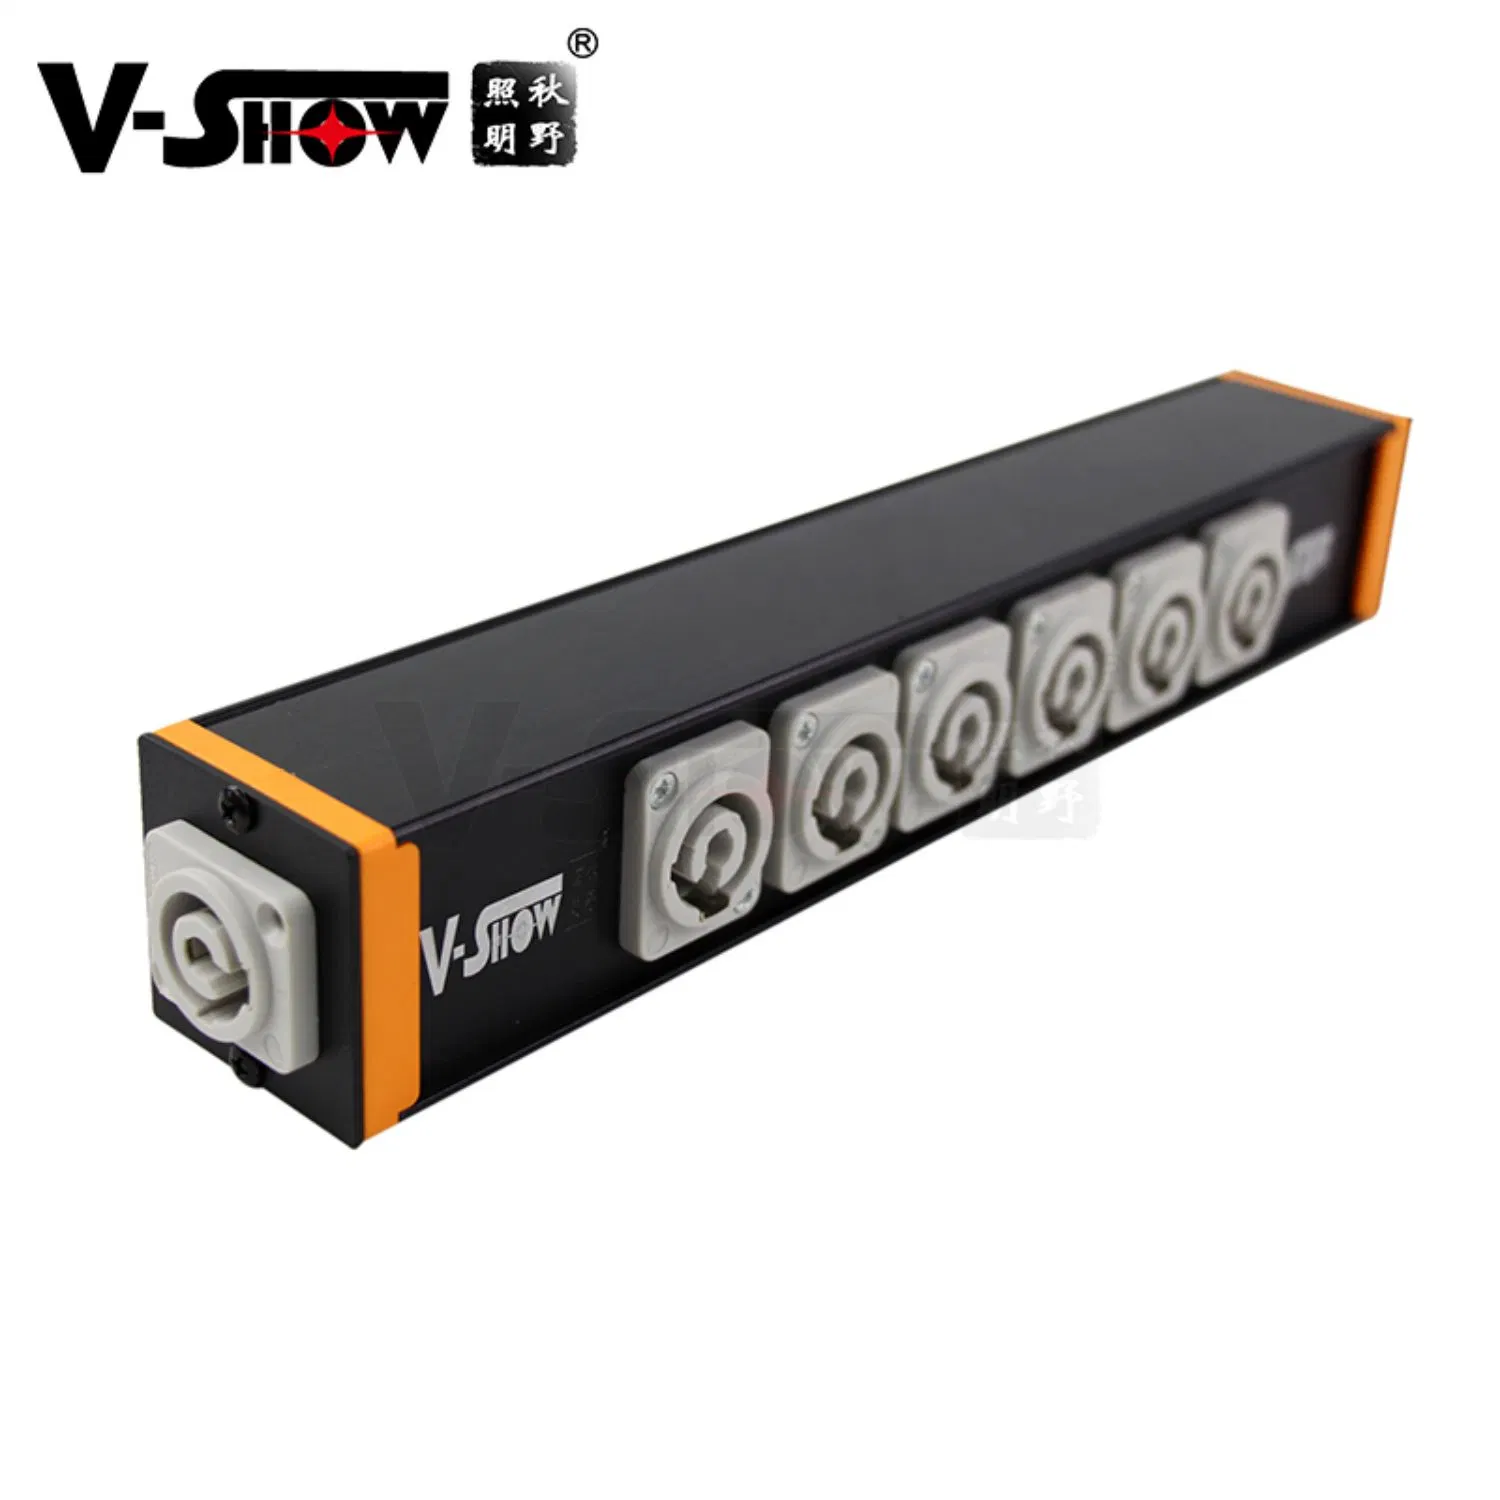 V-Show 6 ports Powercon Power Box